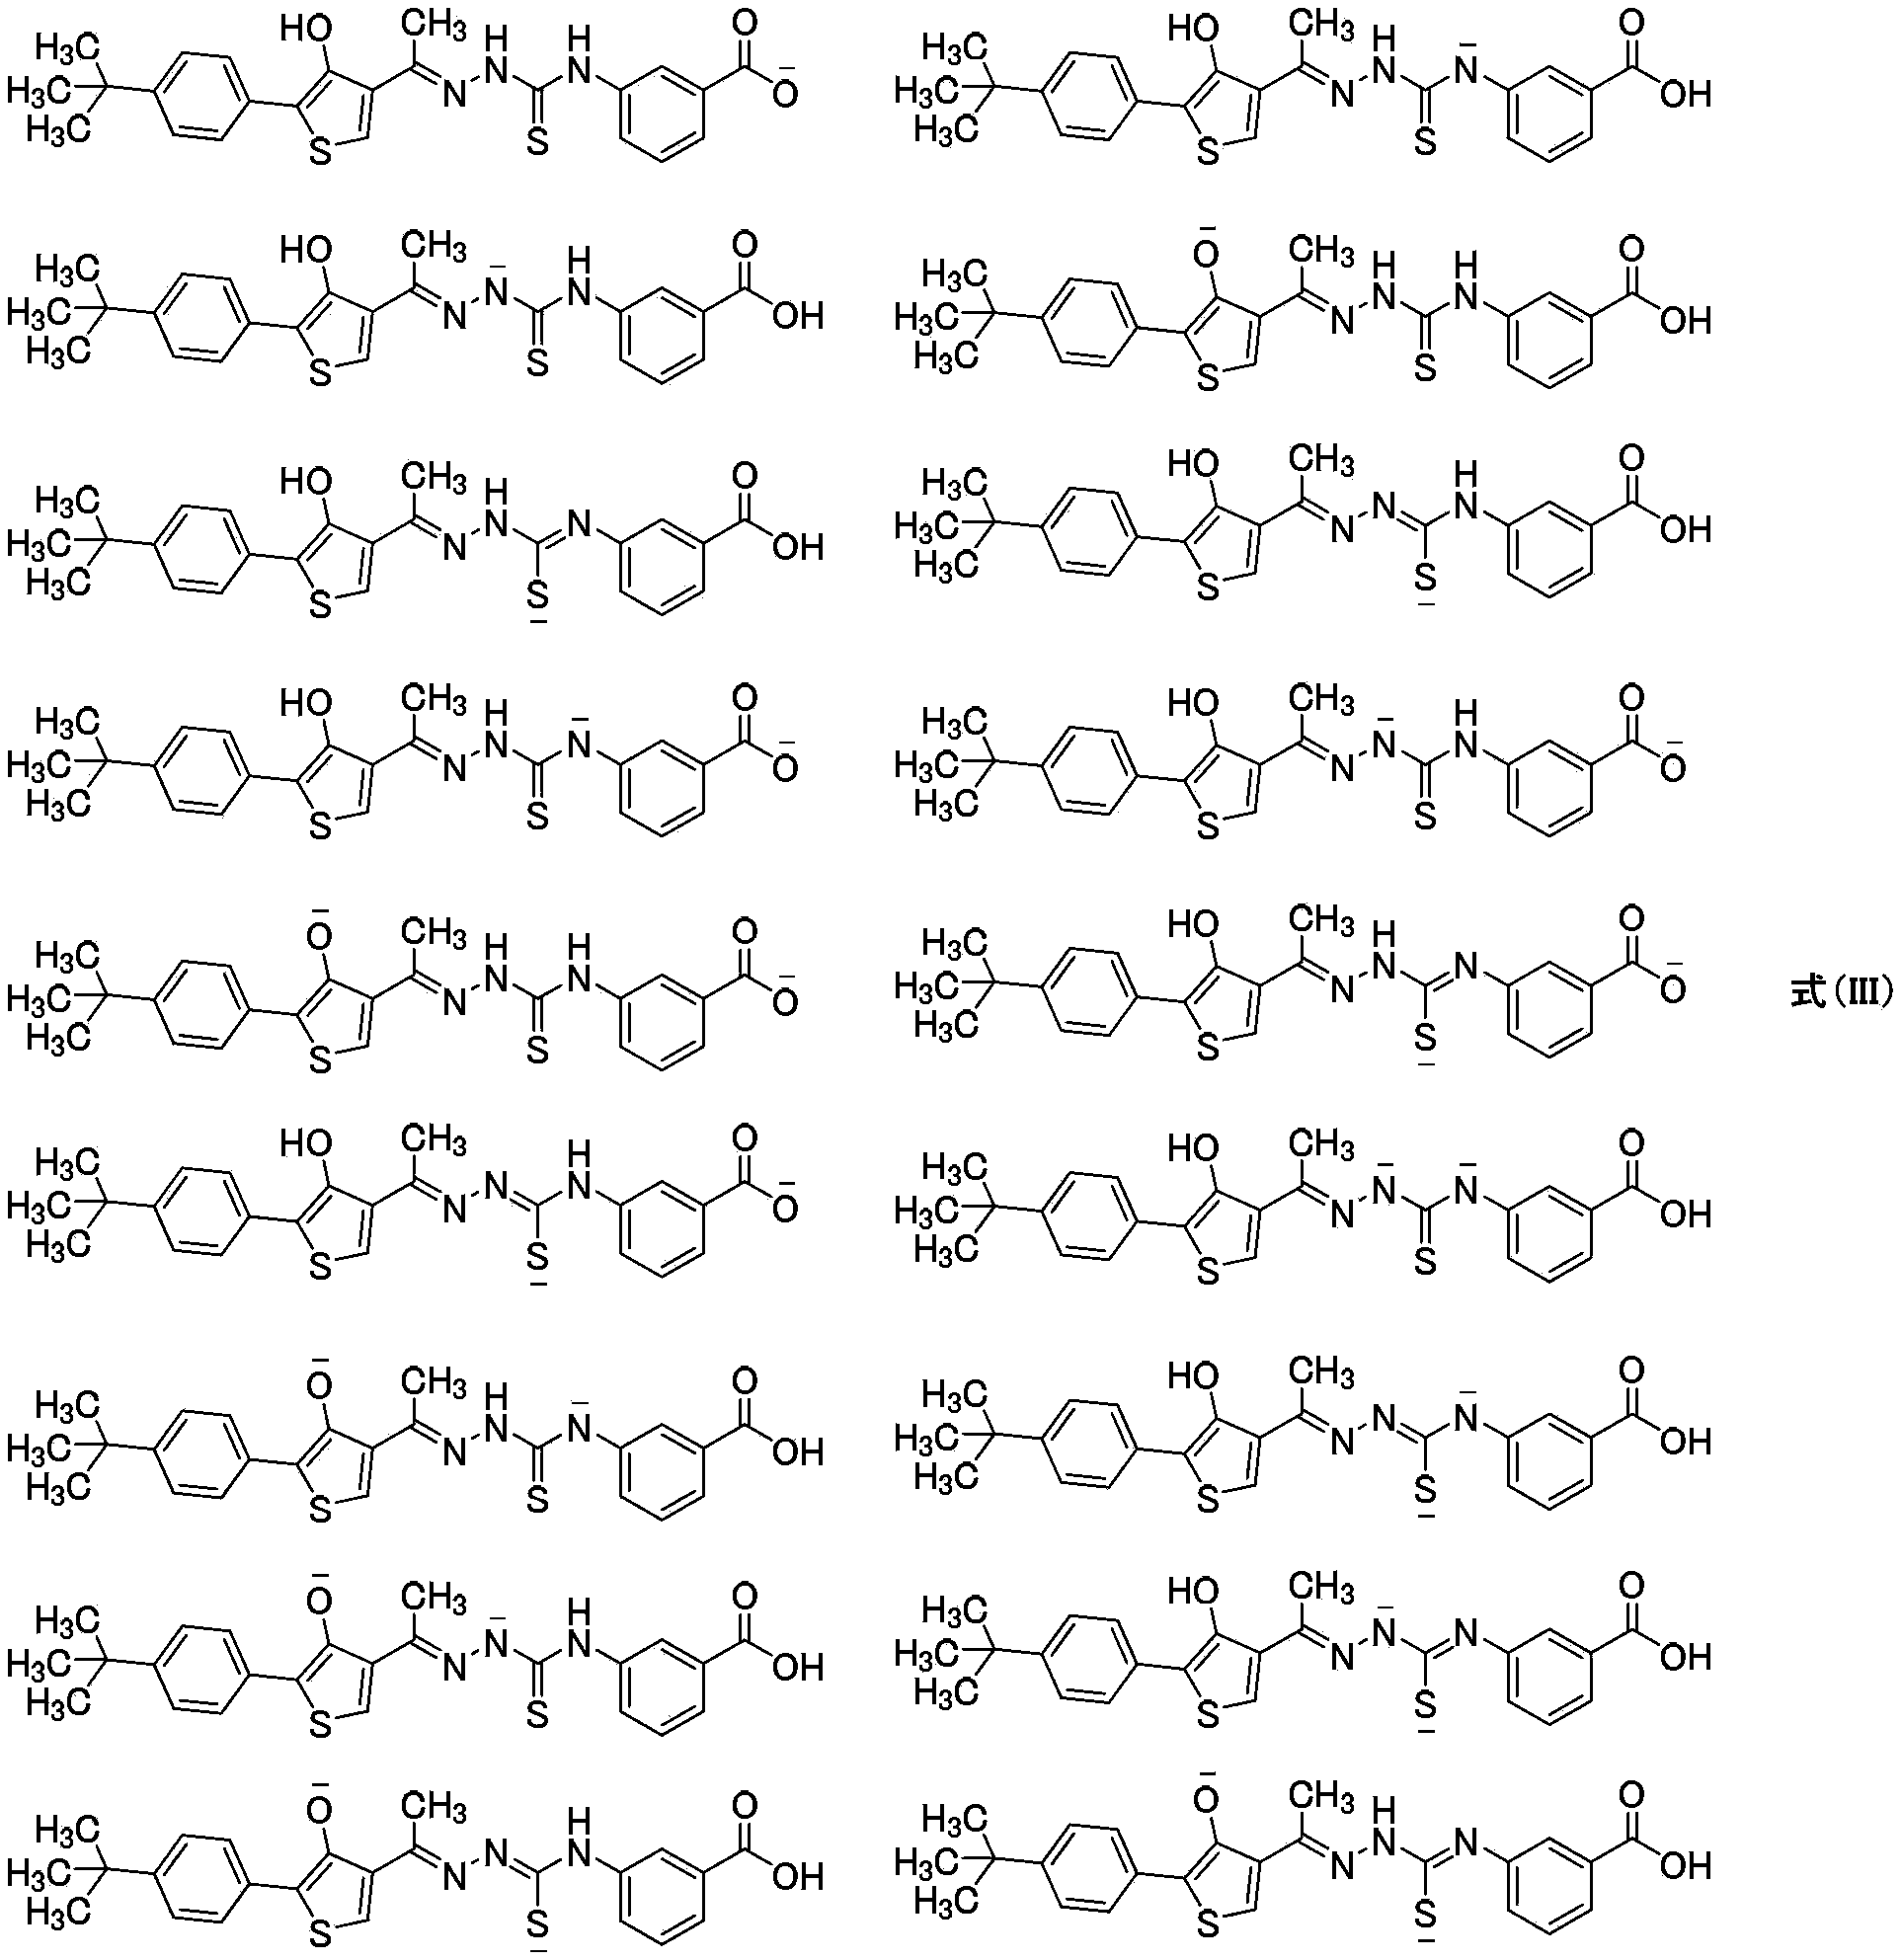 Organic amine salt of aminobenzoic acid derivative and production method thereof